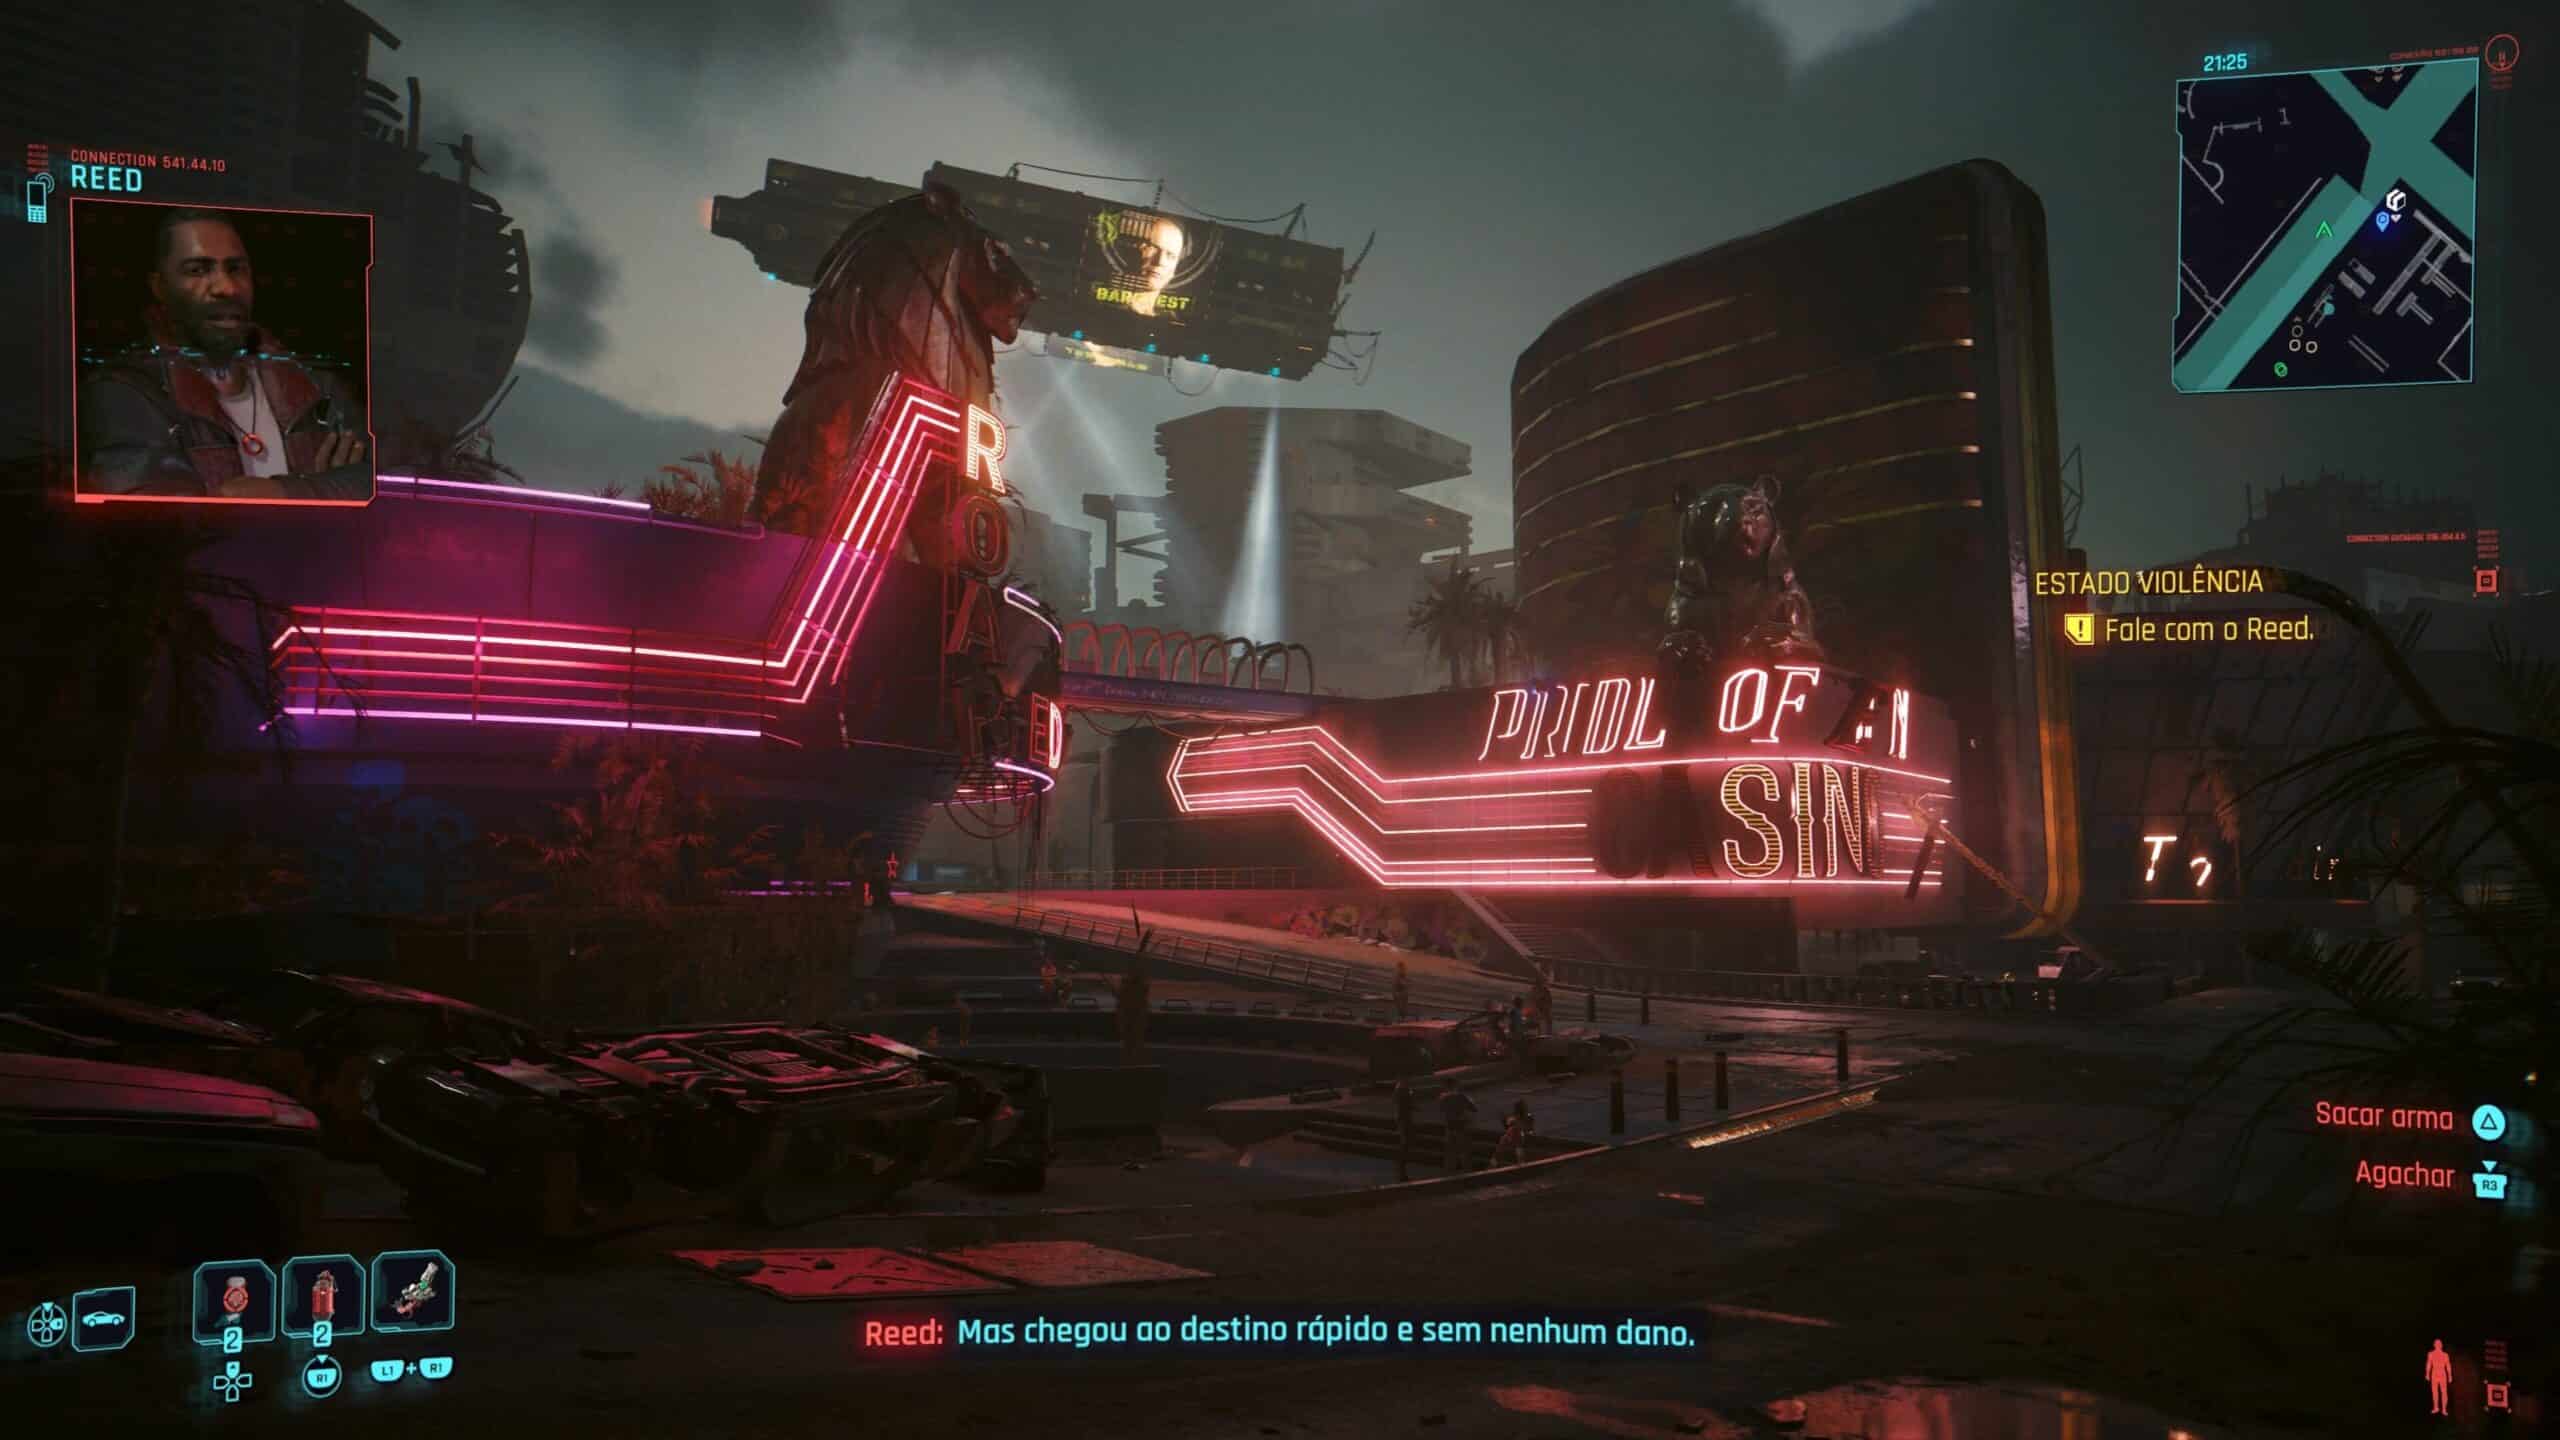 Cyberpunk 2077 Phantom Liberty trará novo final para o jogo base